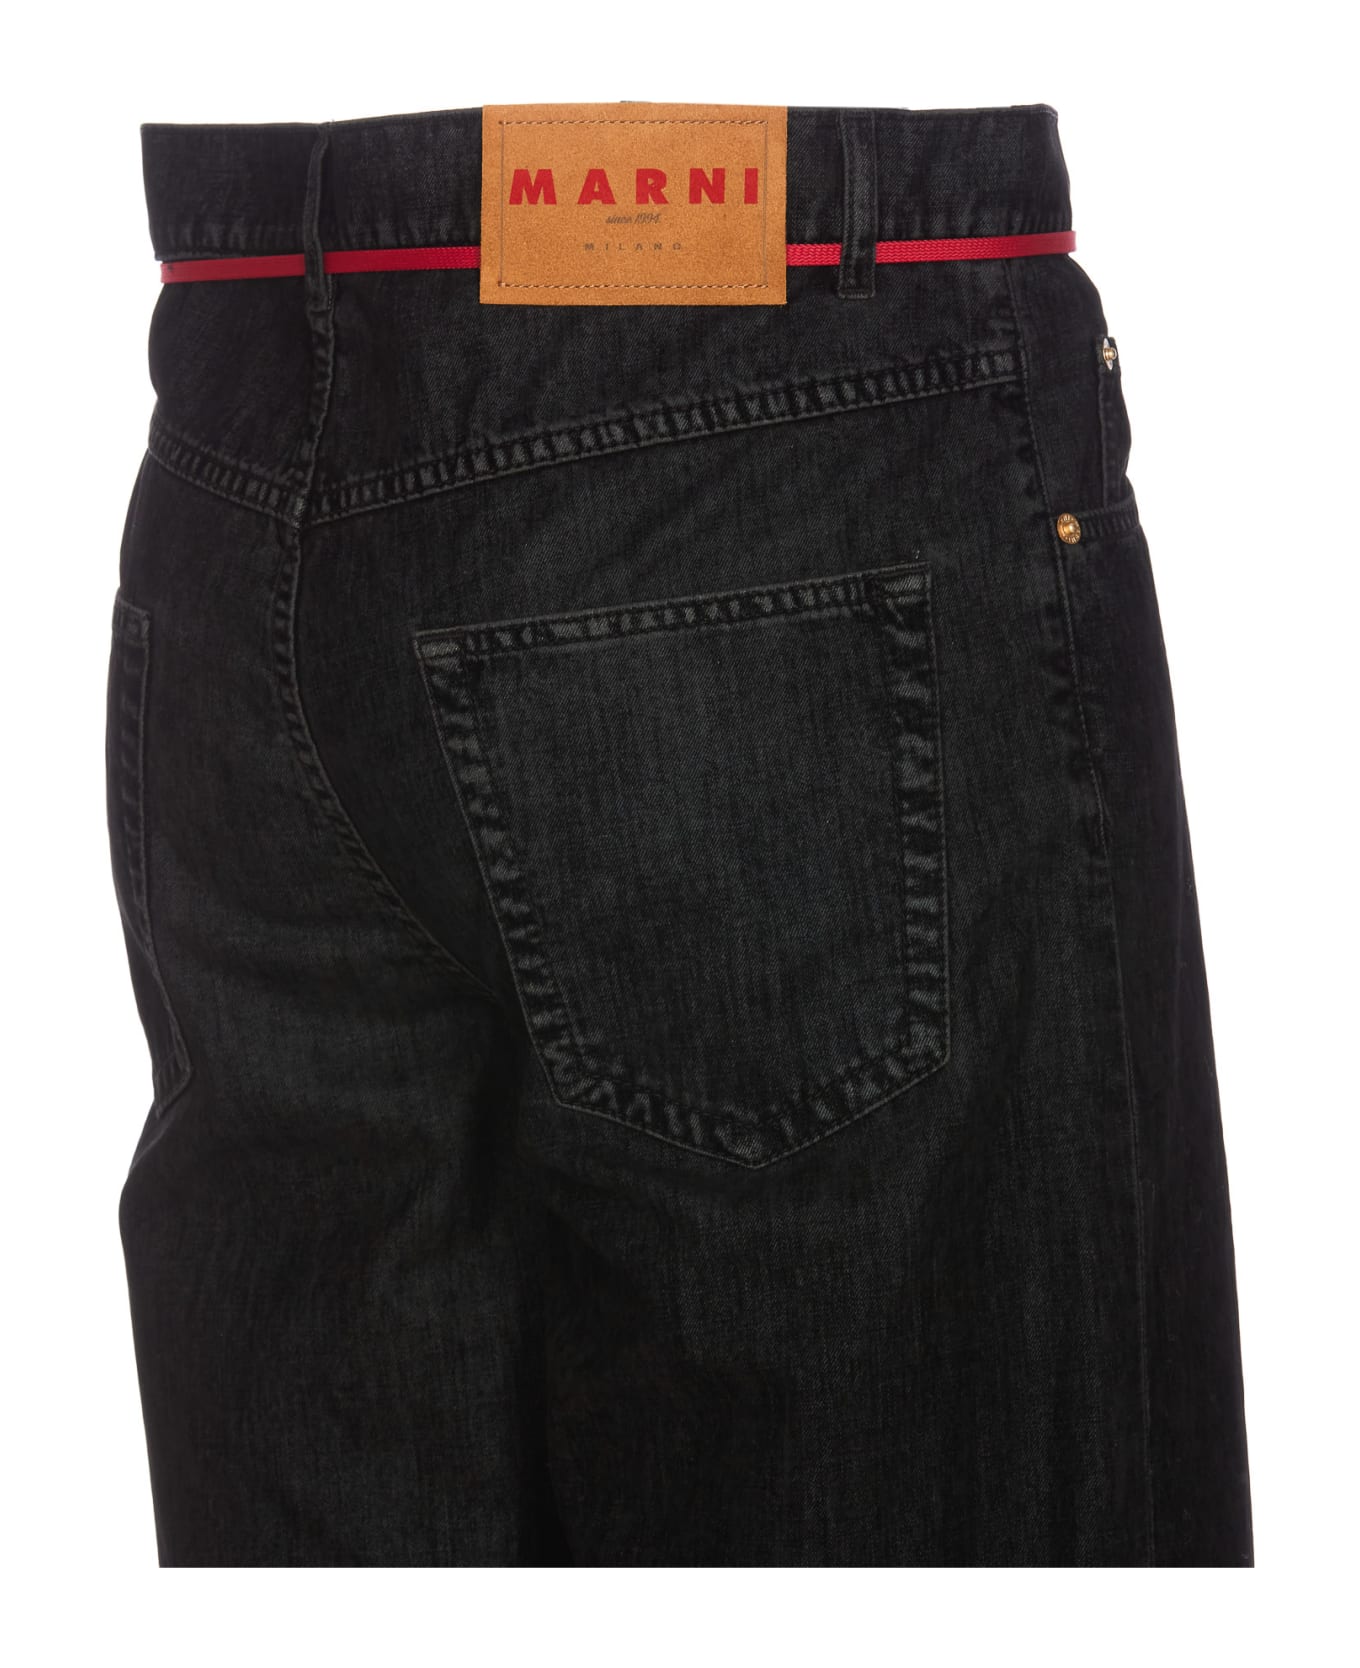 Marni Flared Jeans - Black